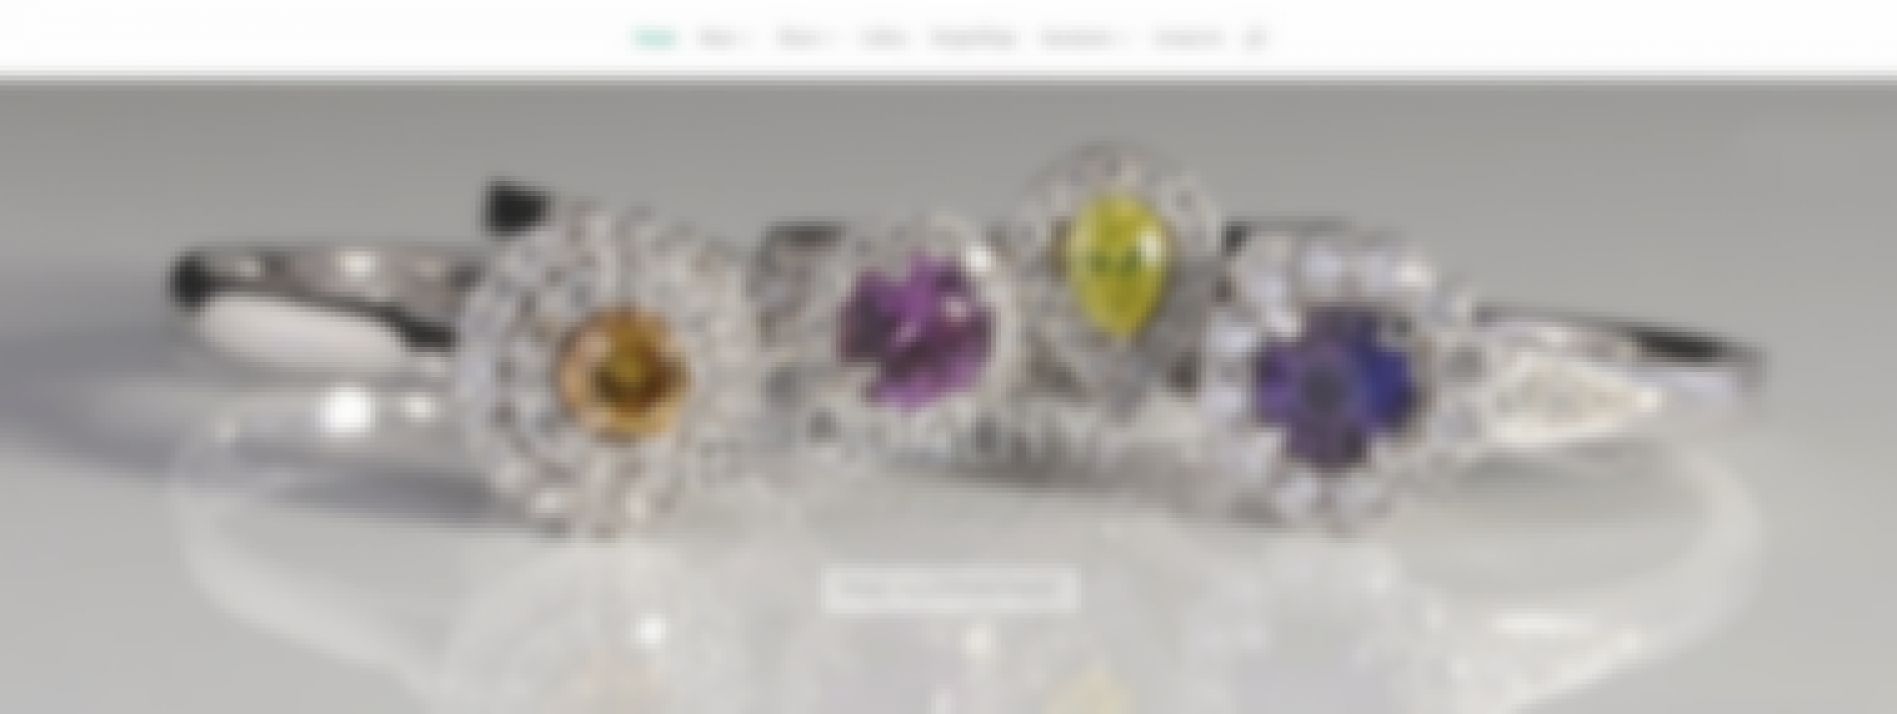 abrecht bird jewellers engagement rings & wedding band shop melbourne